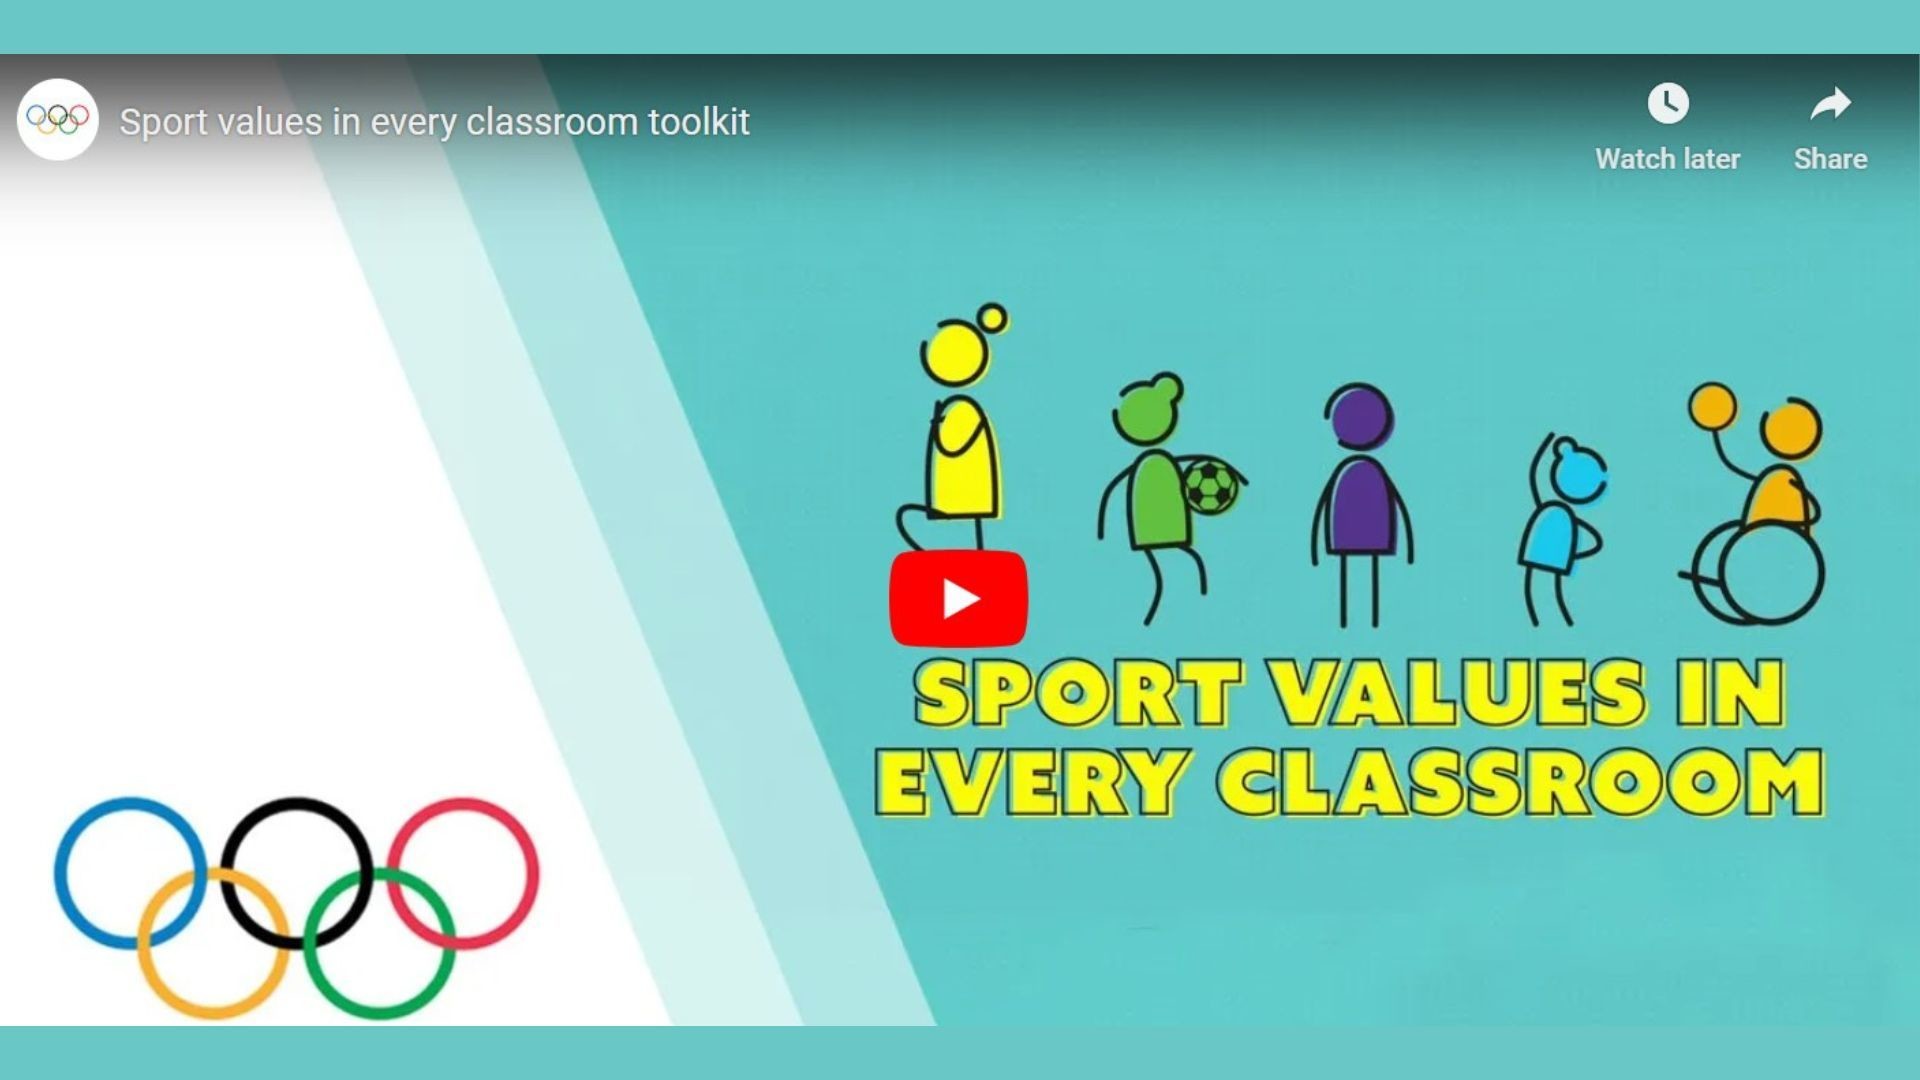 IOC - Sport Values in Every Classroom